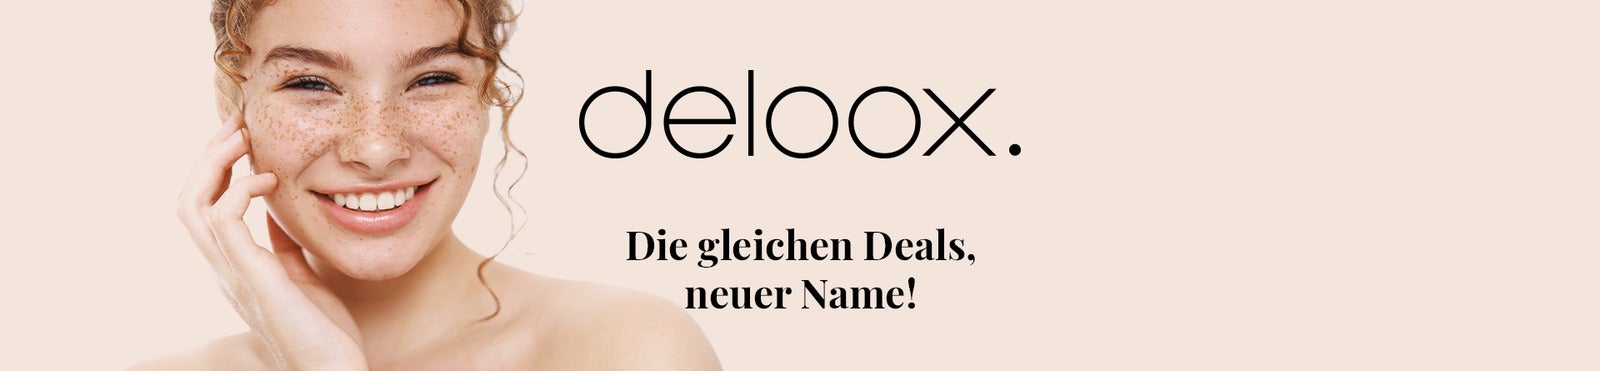 Deloox banner